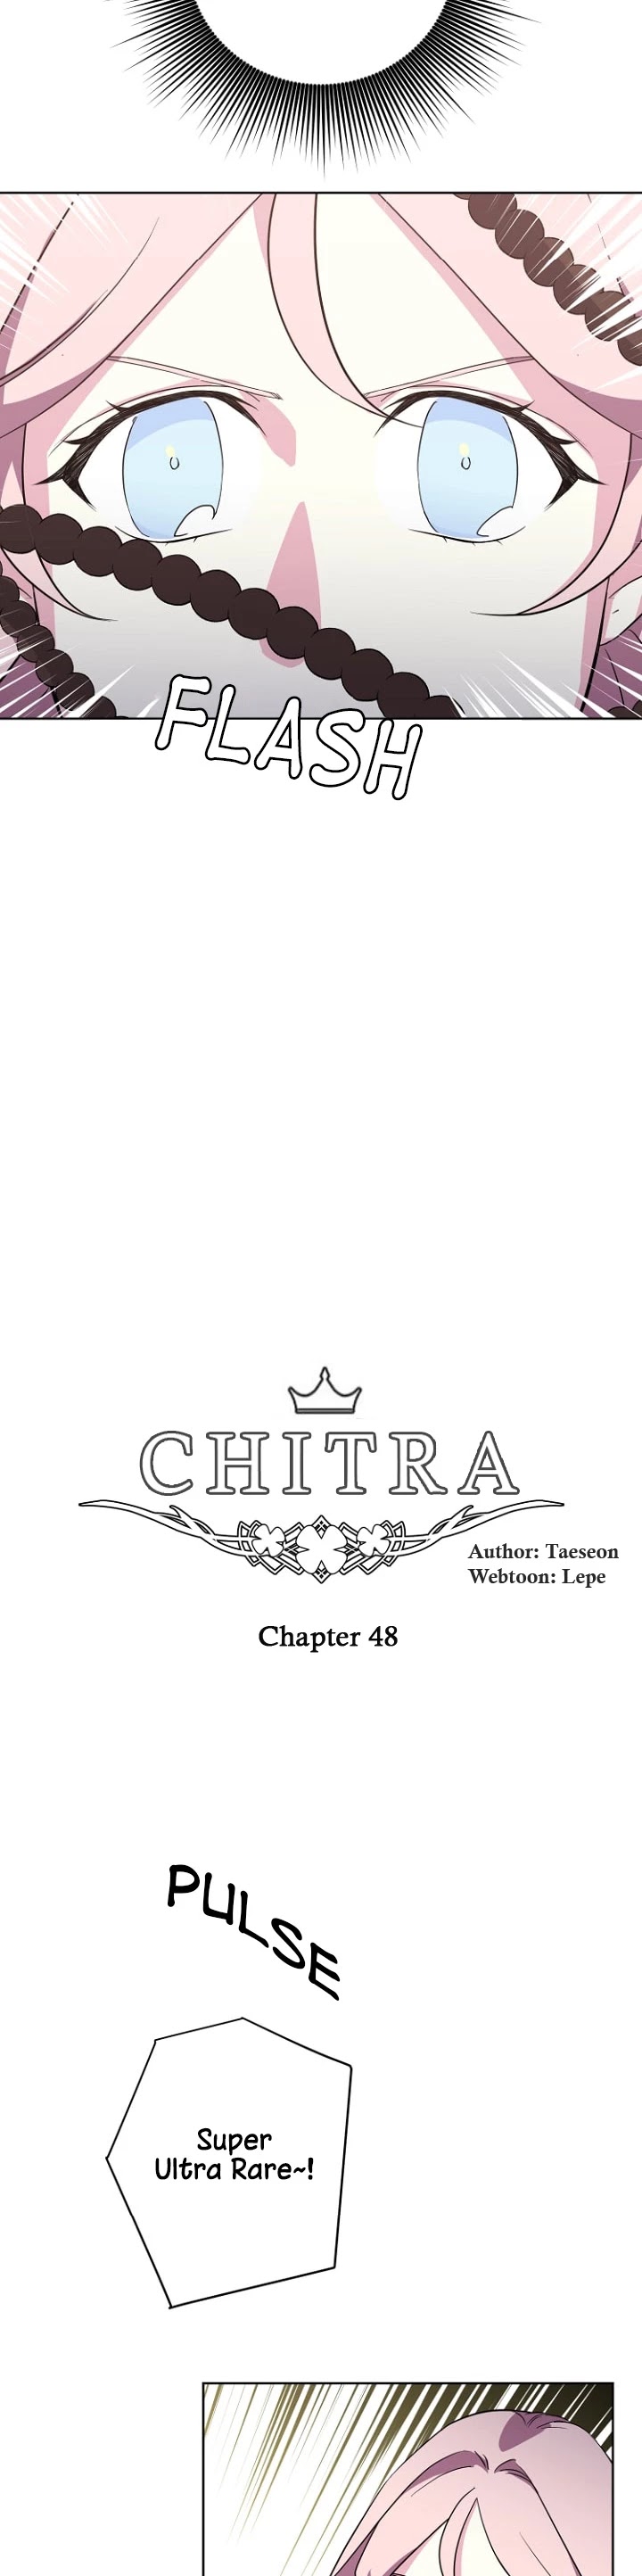 Chitra - Page 2